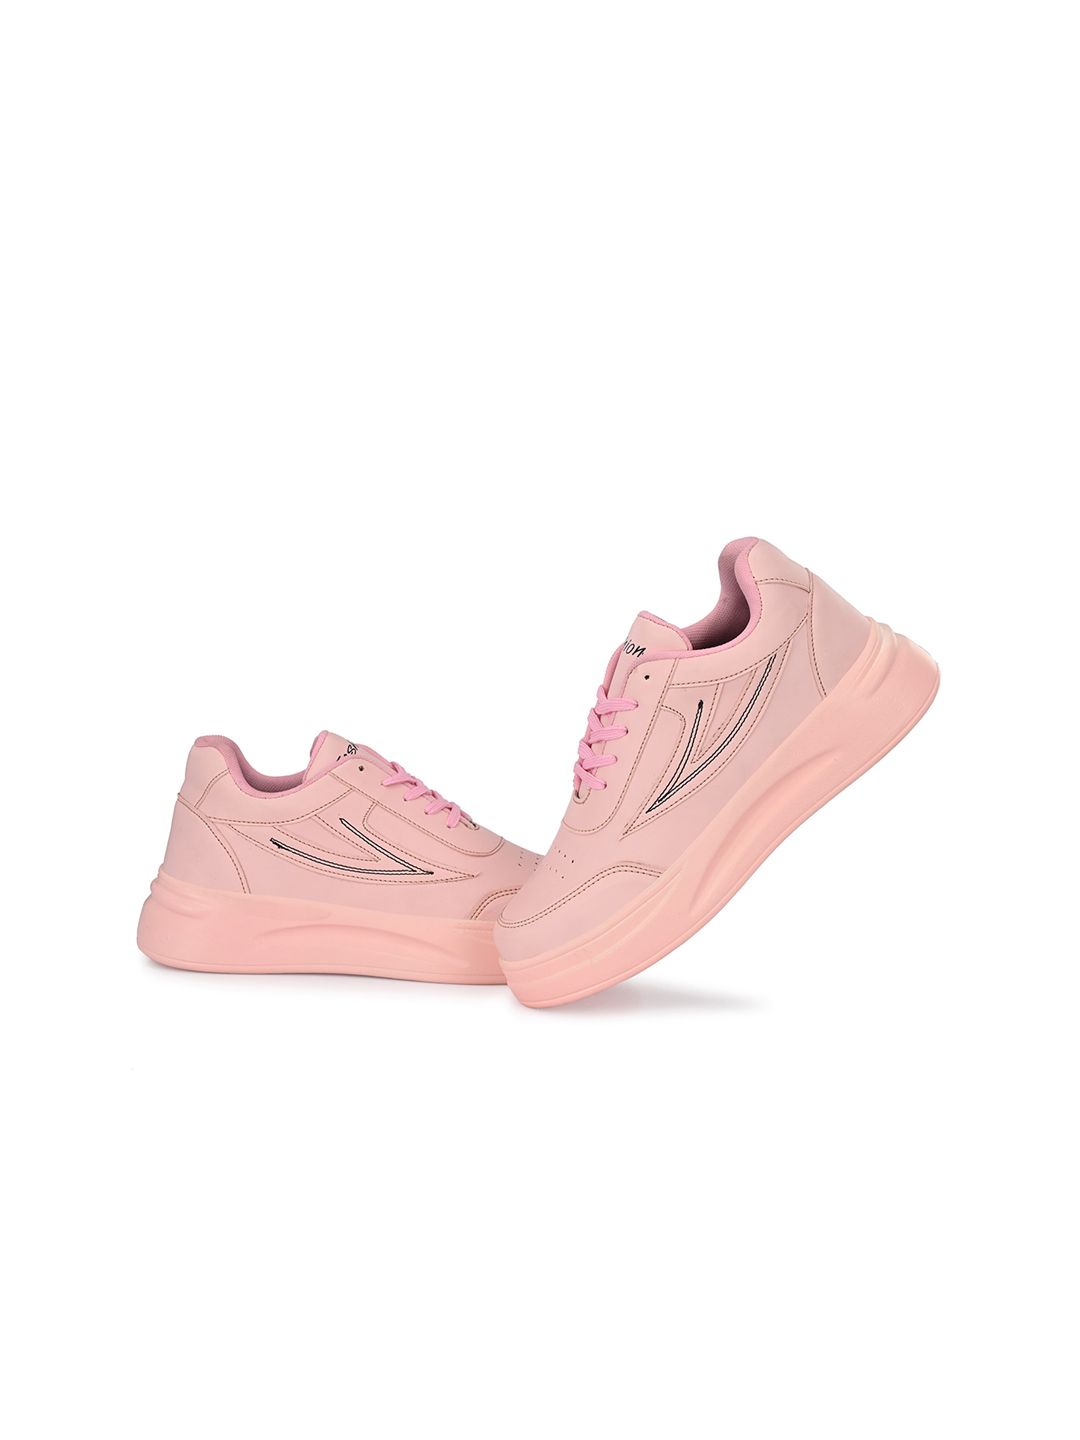 ARIVO Women Pink Sneakers Price in India